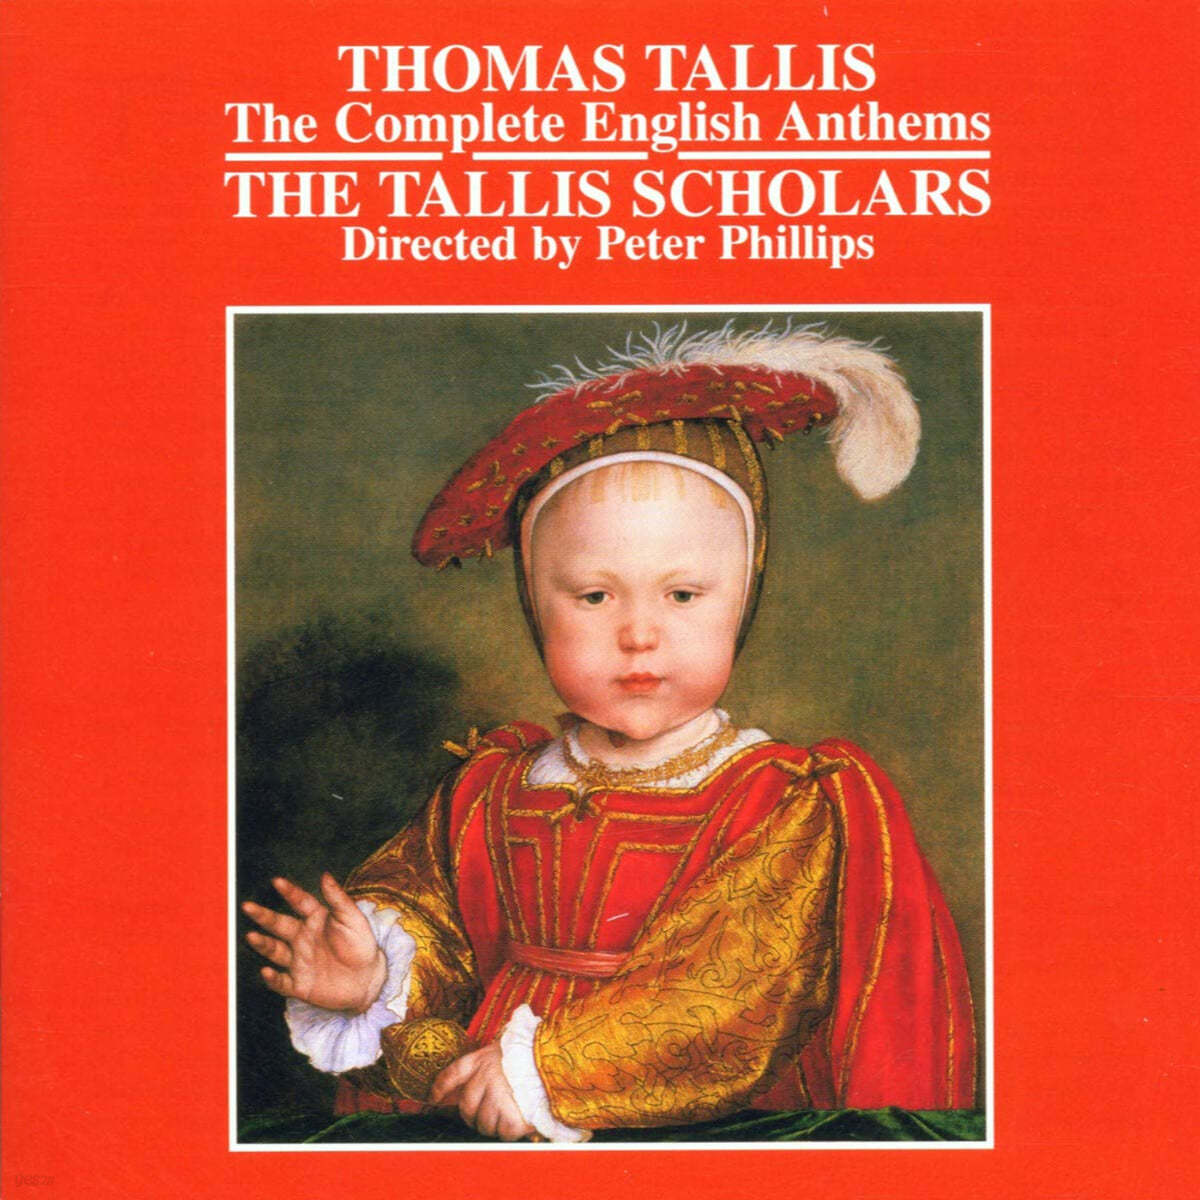 The Tallis Scholars 토마스 탈리스: 잉글리쉬 앤덤 전곡 (Thomas Tallis: The Complete English Anthems) 